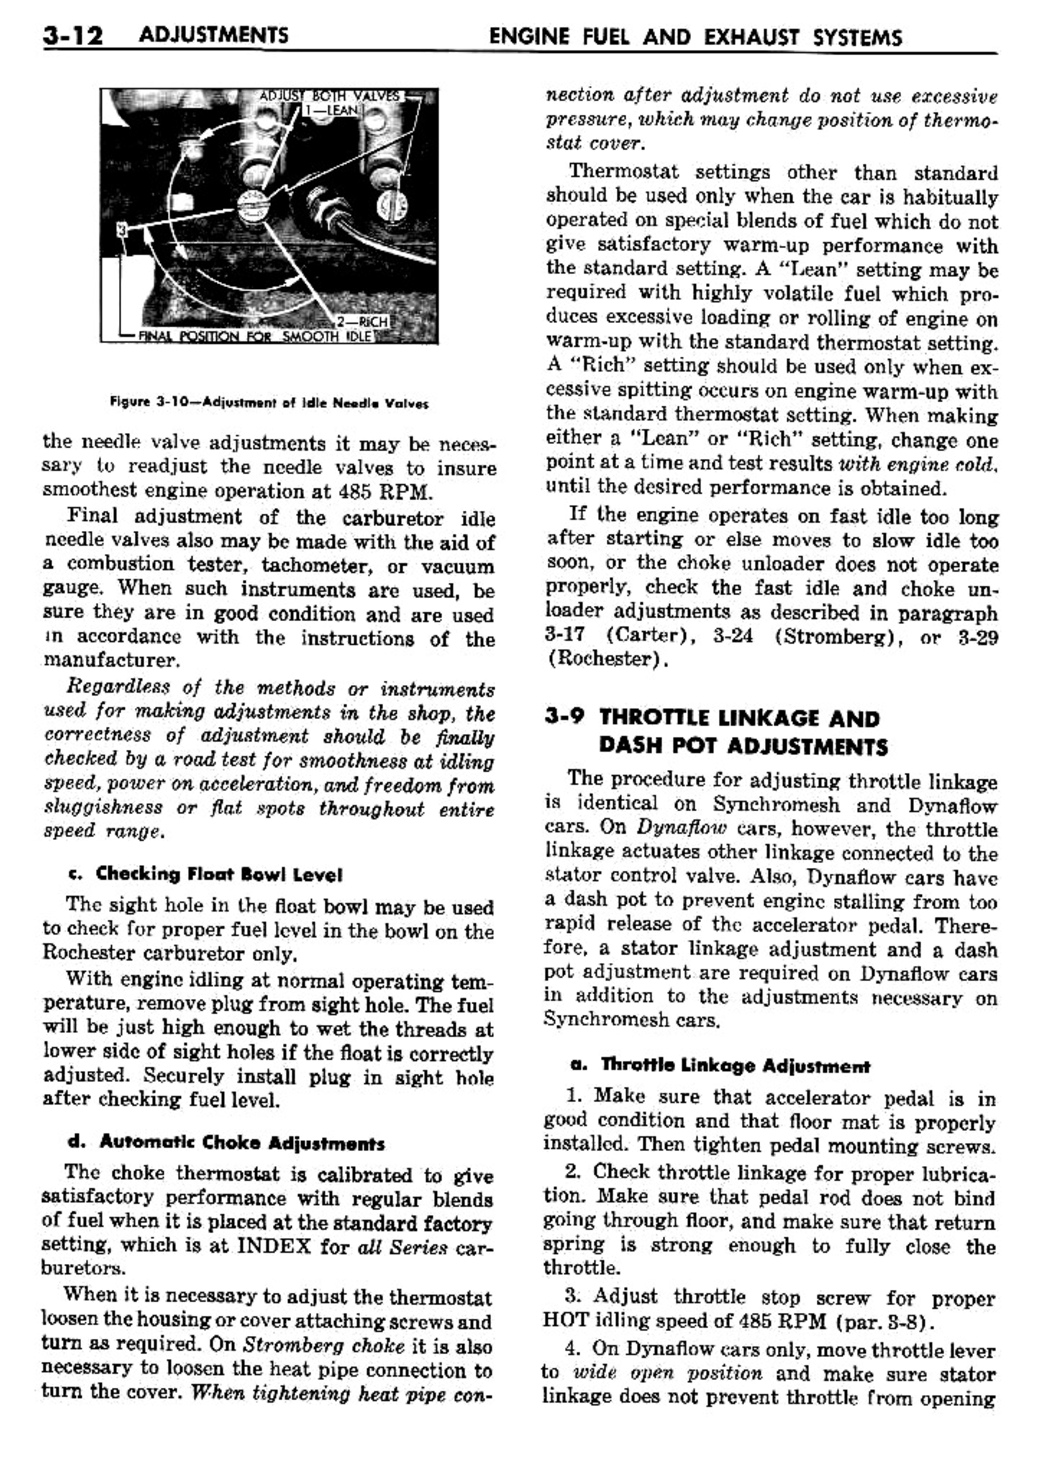 n_04 1957 Buick Shop Manual - Engine Fuel & Exhaust-012-012.jpg